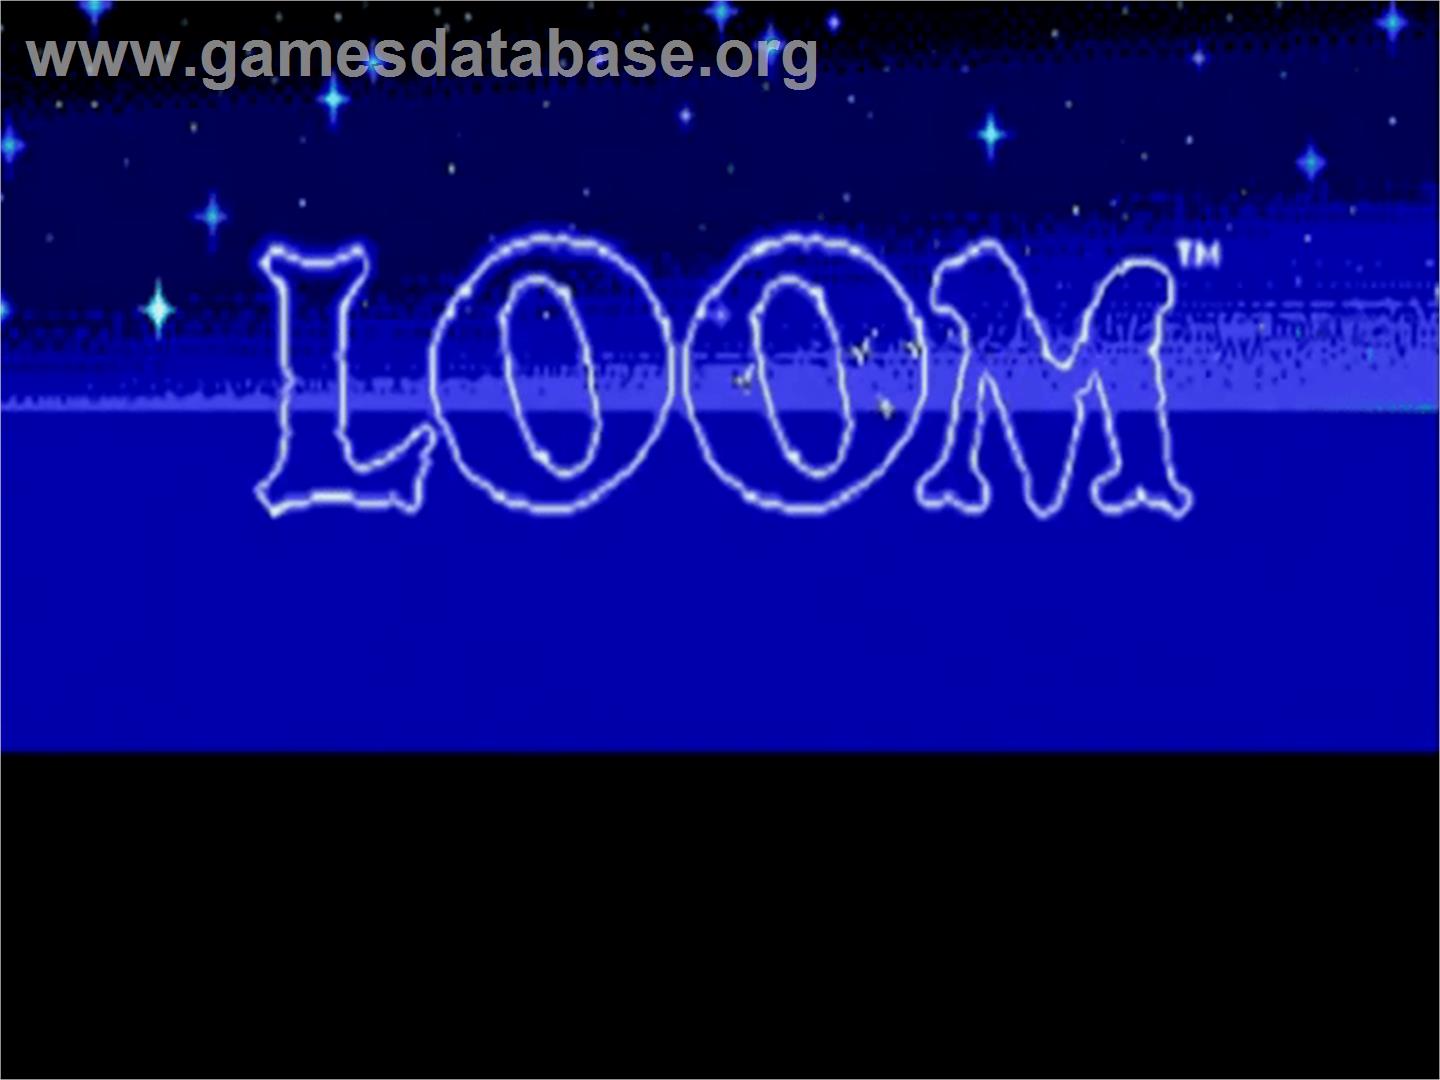 Loom - NEC TurboGrafx CD - Artwork - Title Screen